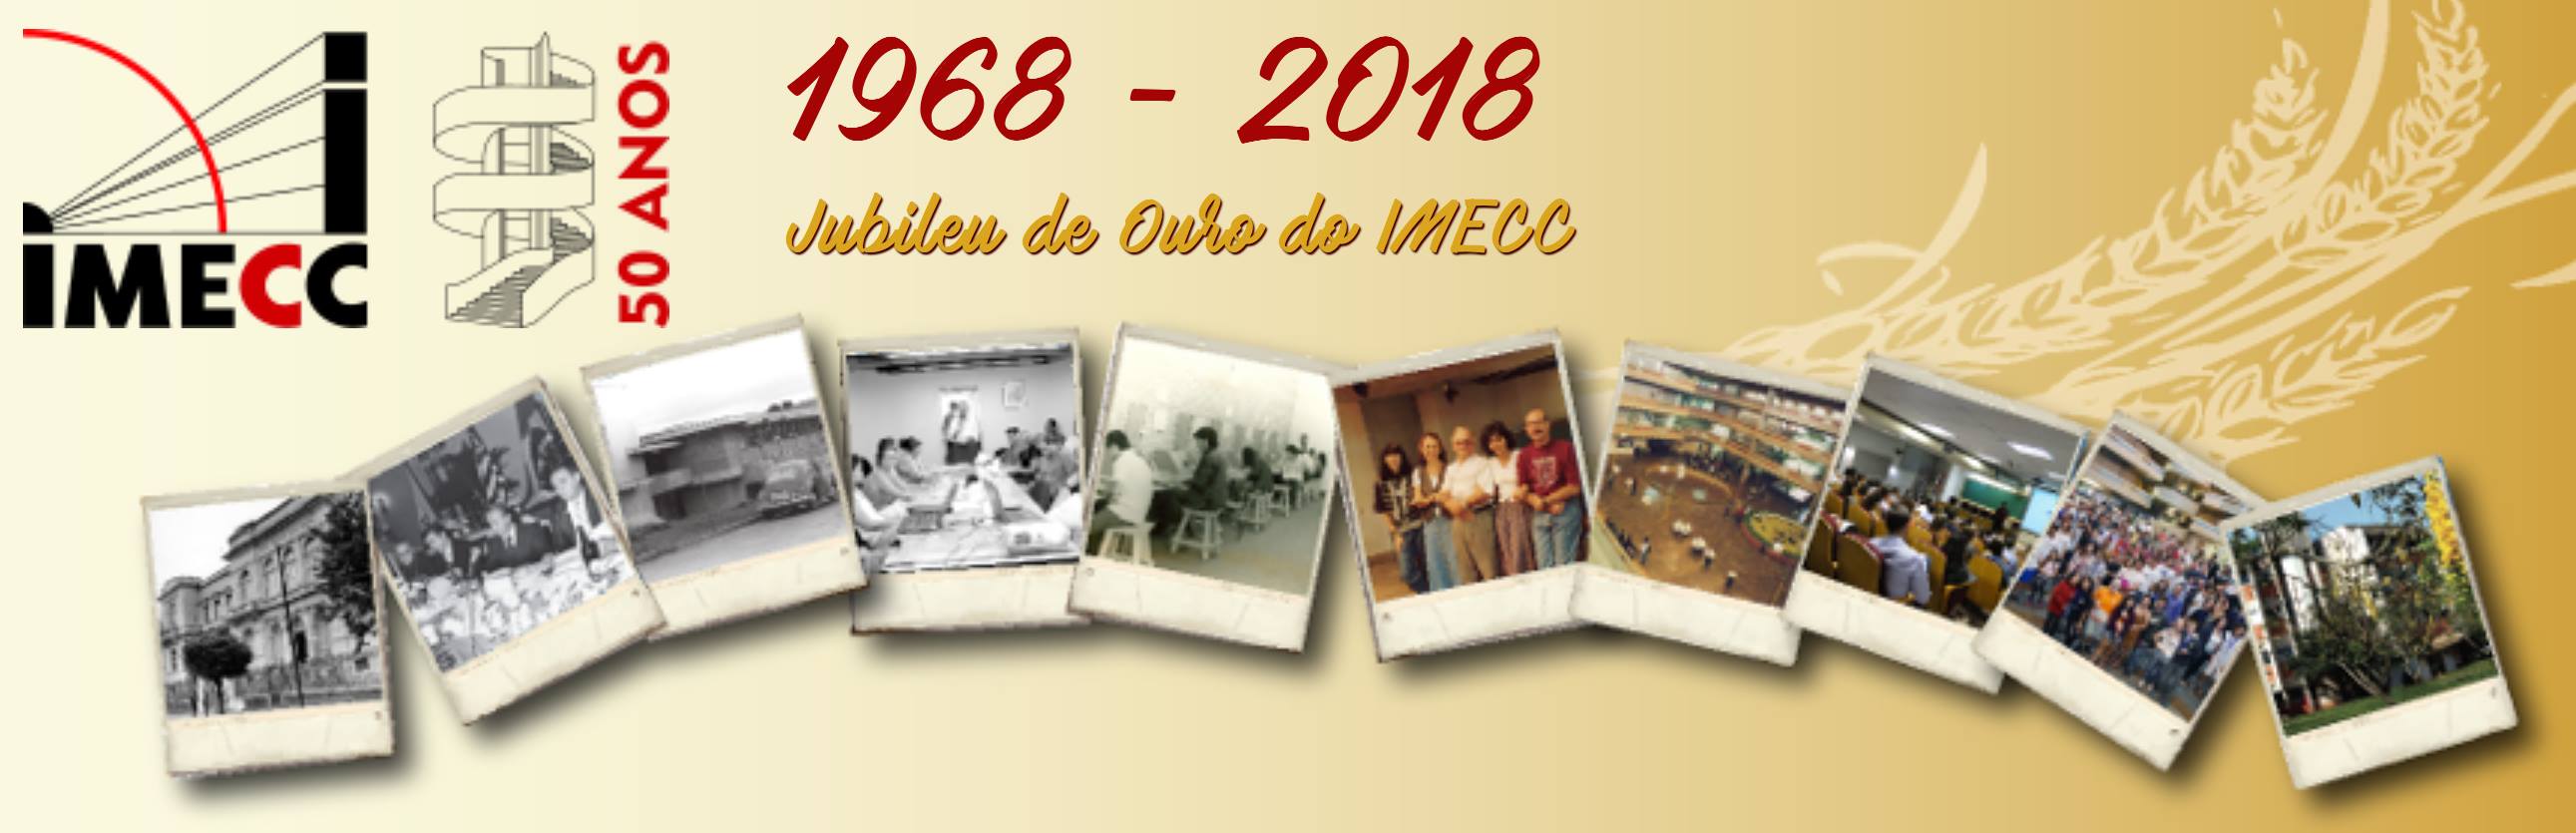 50 anos IMECC